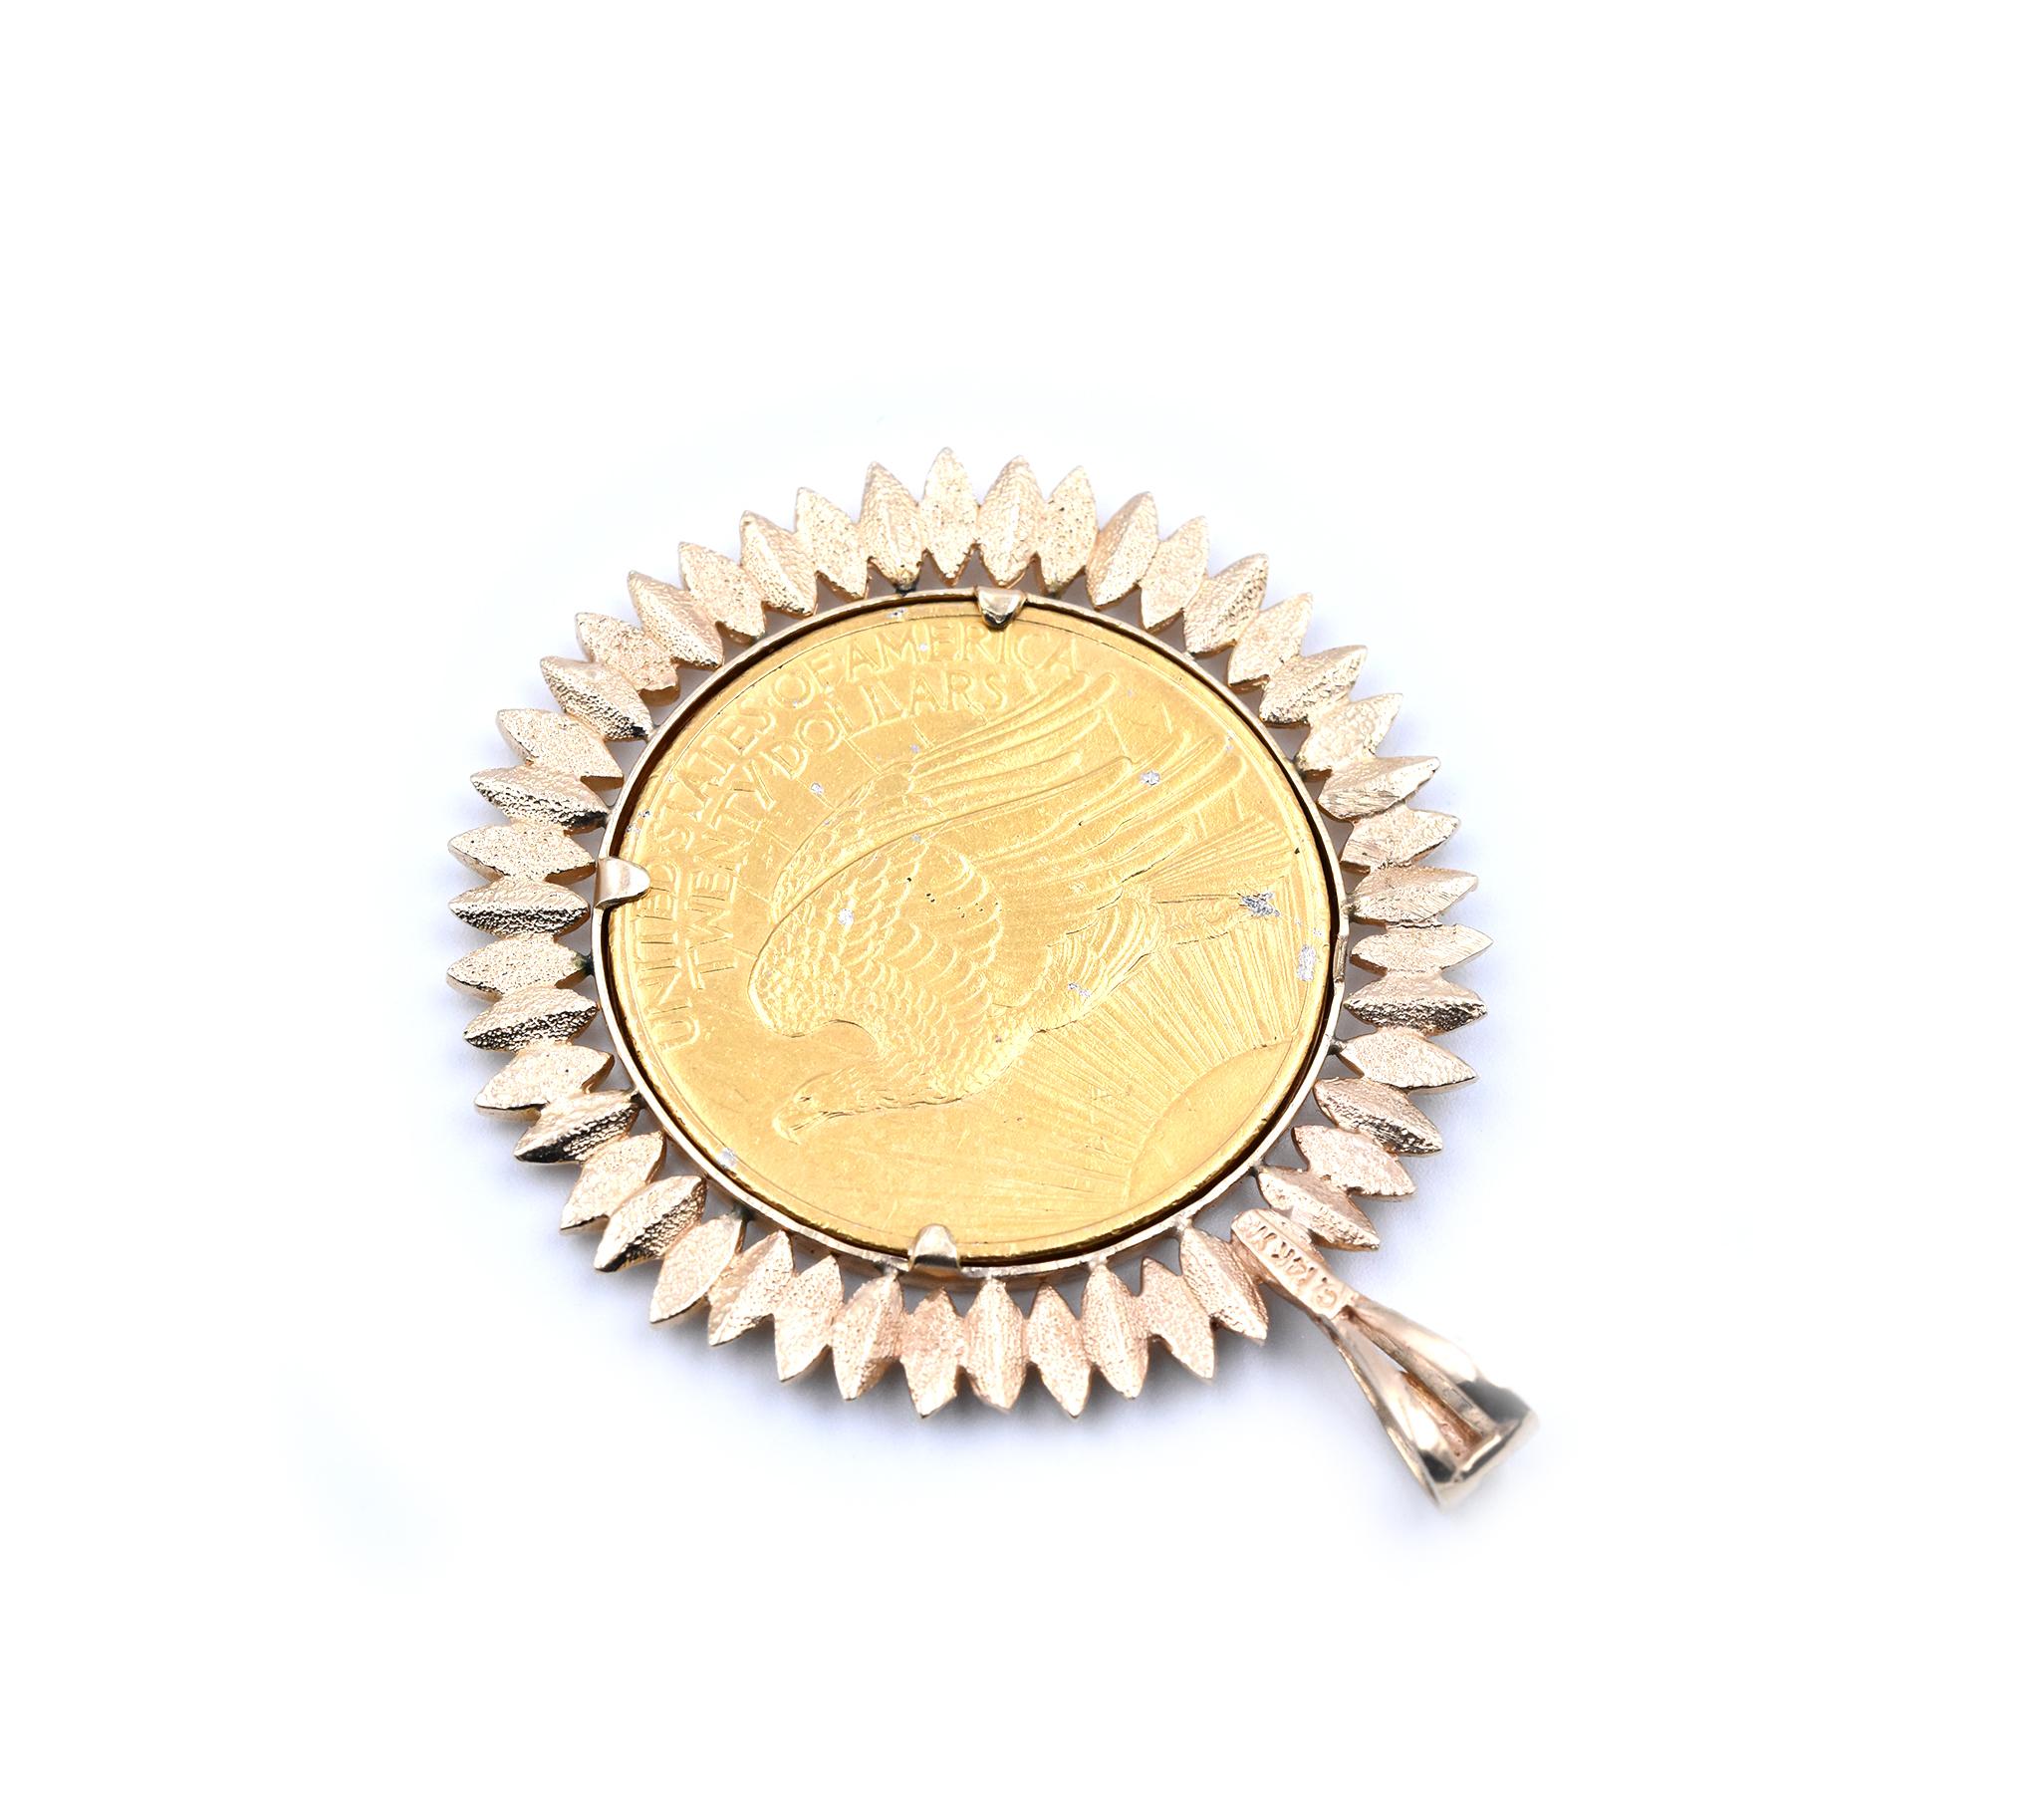 14 karat gold coin